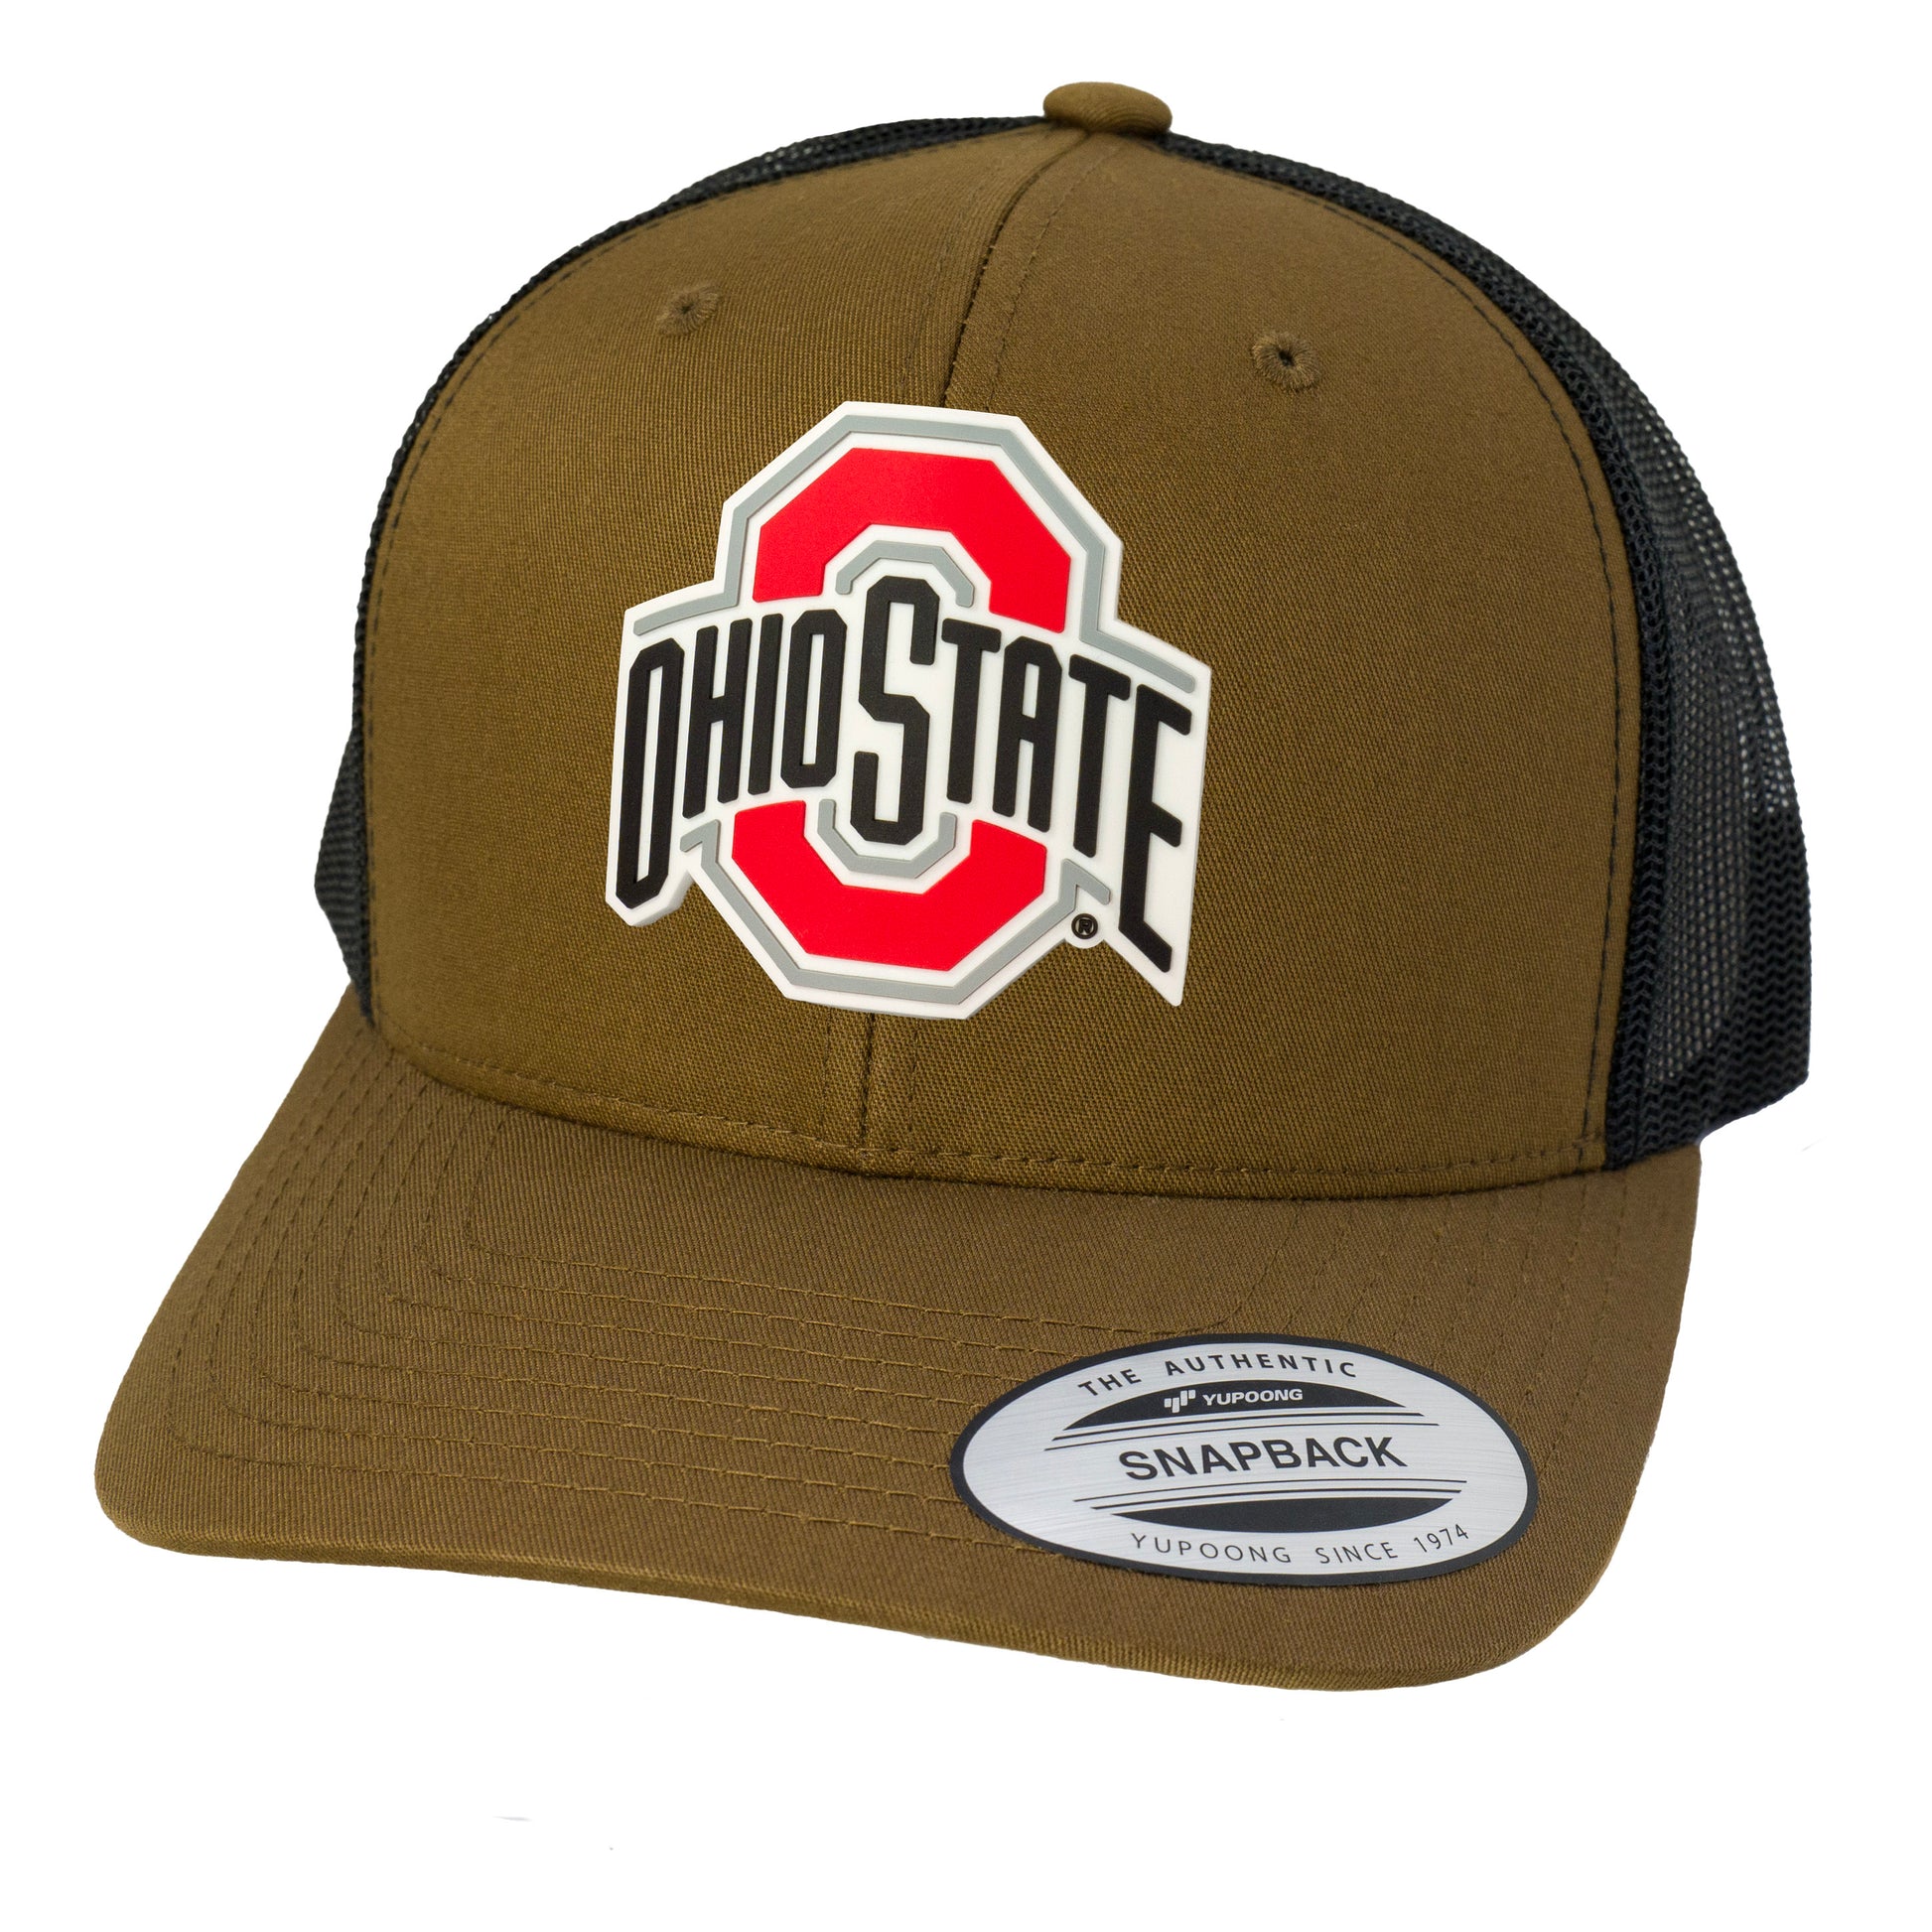 Ohio State Buckeyes 3D YP Snapback Trucker Hat- Coyote Brown/ Black - Ten Gallon Hat Co.